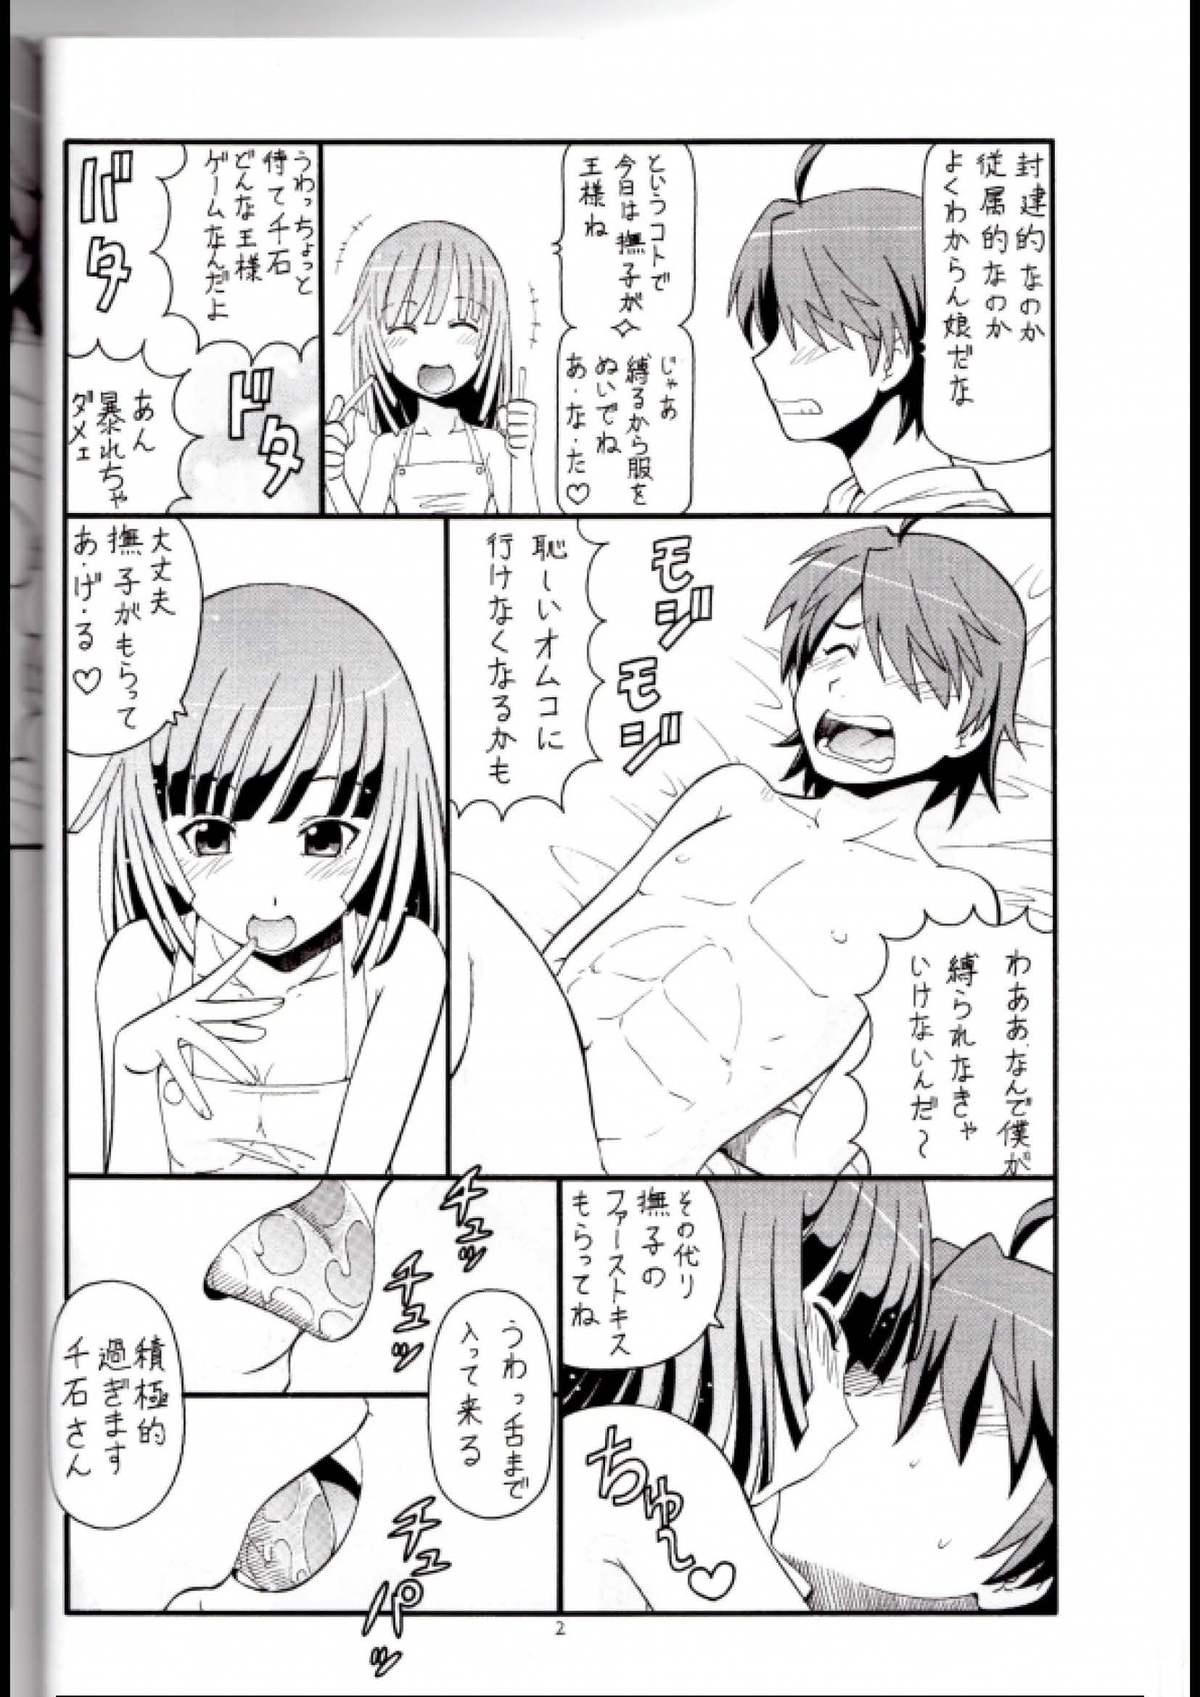 Couch Hito ni Hakanai to Kaite "Araragi" to Yomu 2&3 - Bakemonogatari Tributo - Page 3